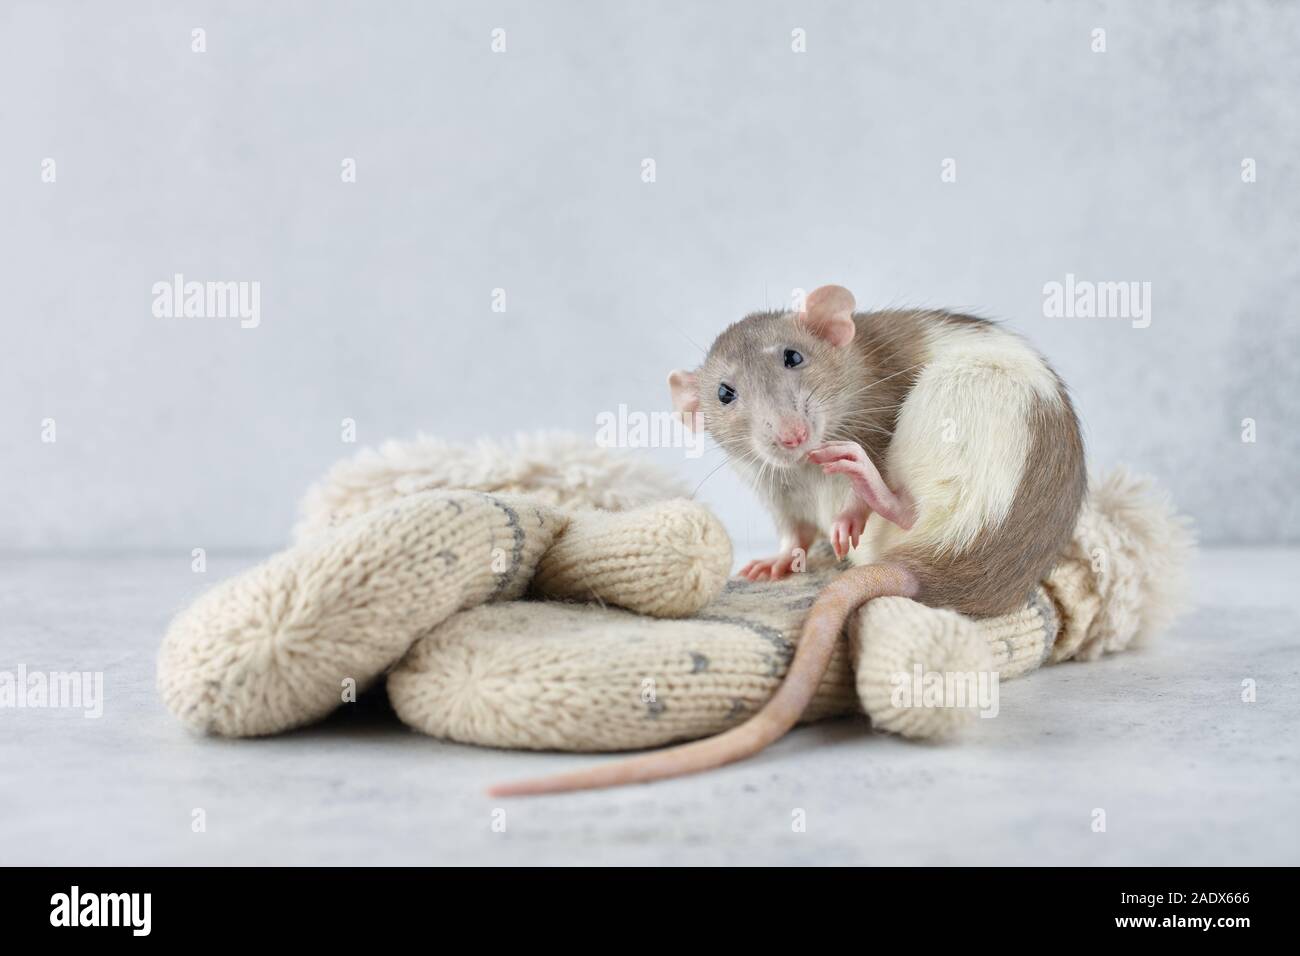 Rat on winter mittens. New Year 2020 symbol. Stock Photo